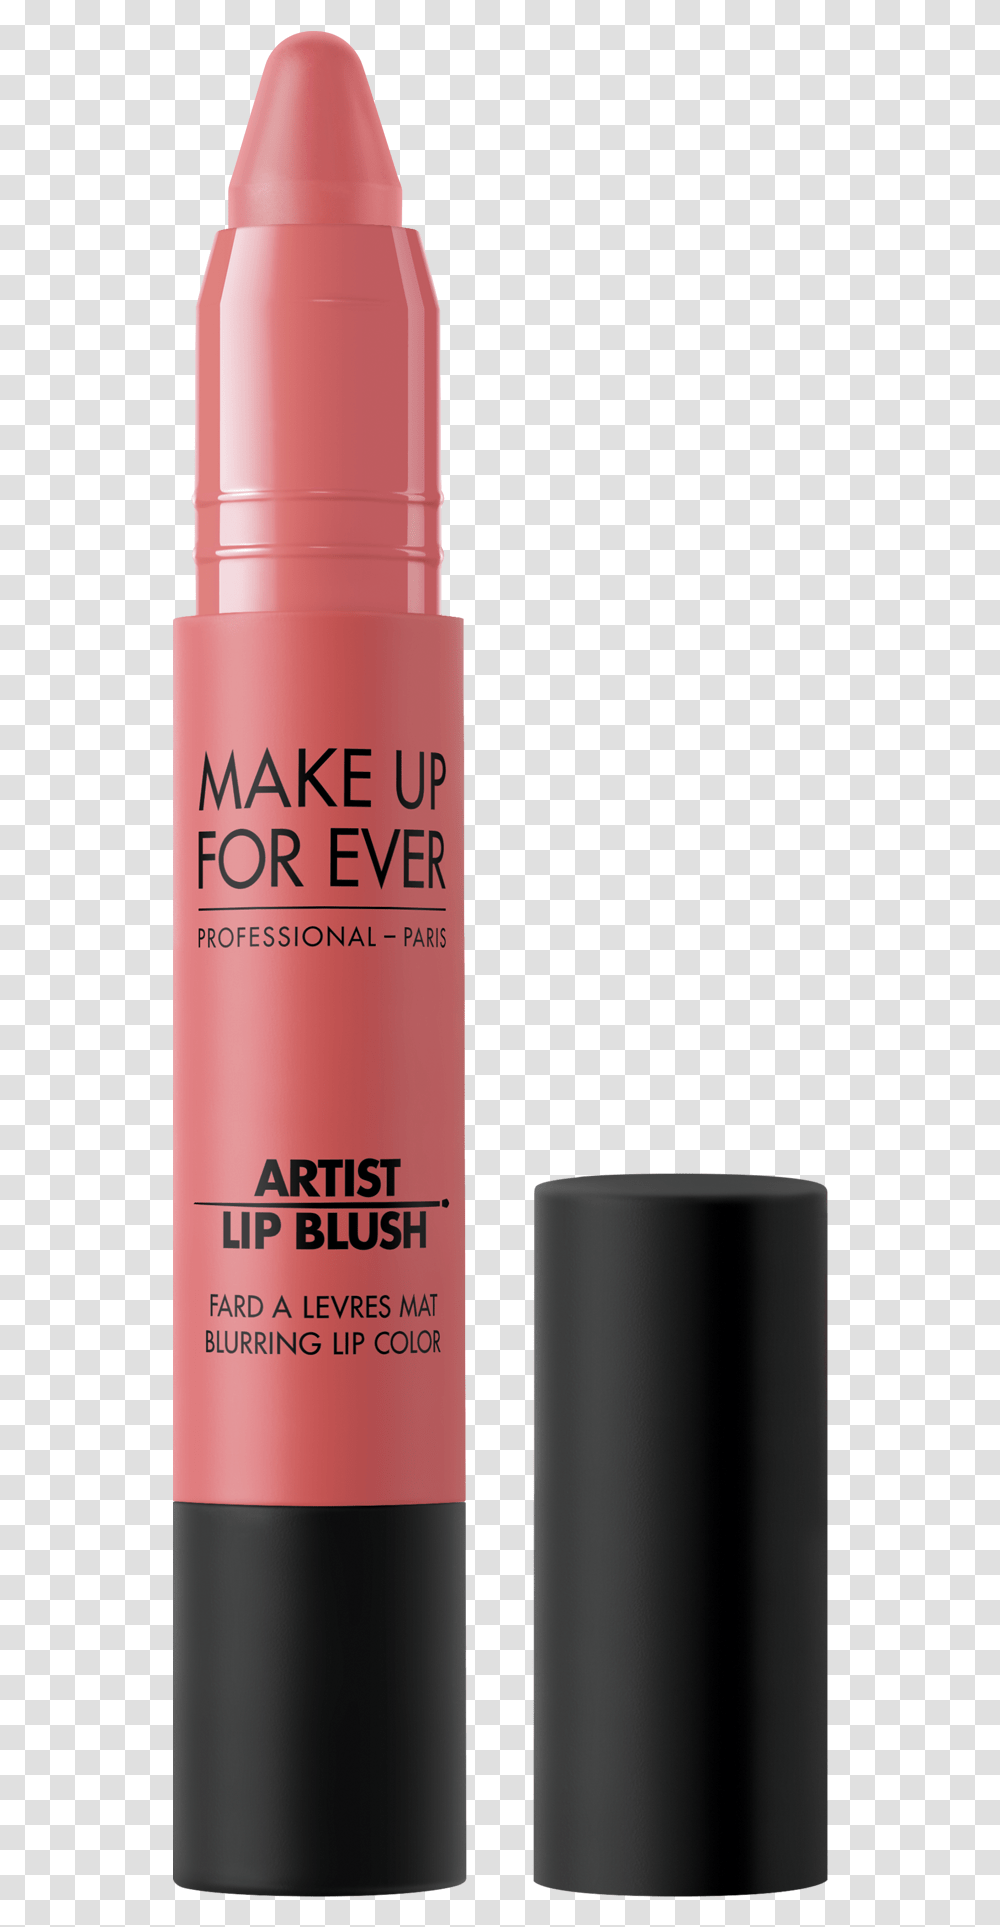 Artist Lip Blush Artist Lip Blush Mufe, Aluminium, Tin, Can, Spray Can Transparent Png